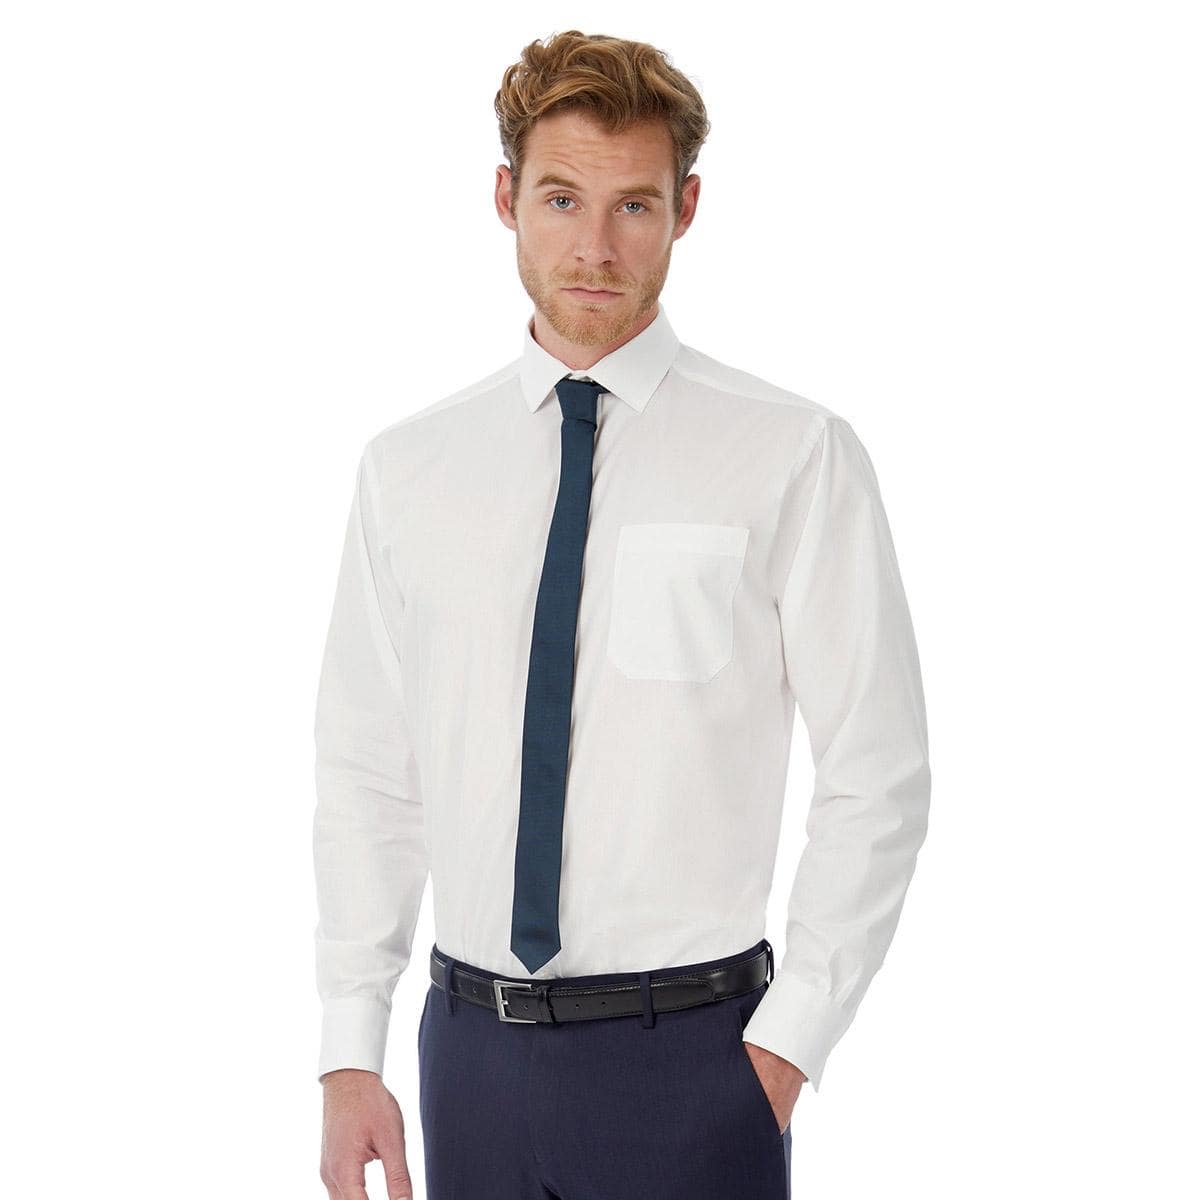 BCSMP41-heritage-bianco-camicia-uomo-b&c-manica-lunga-elegante-min